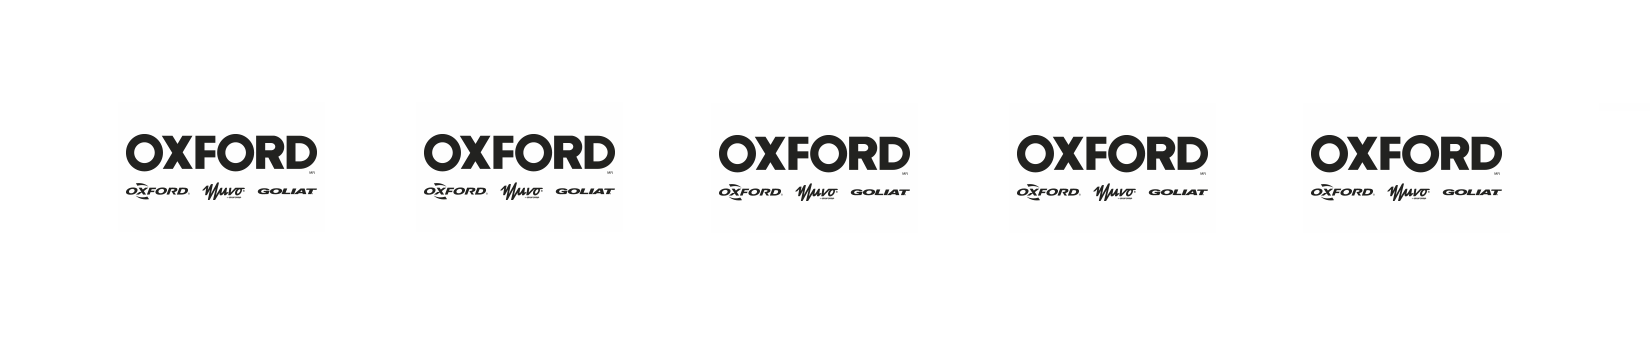 Oxford Store